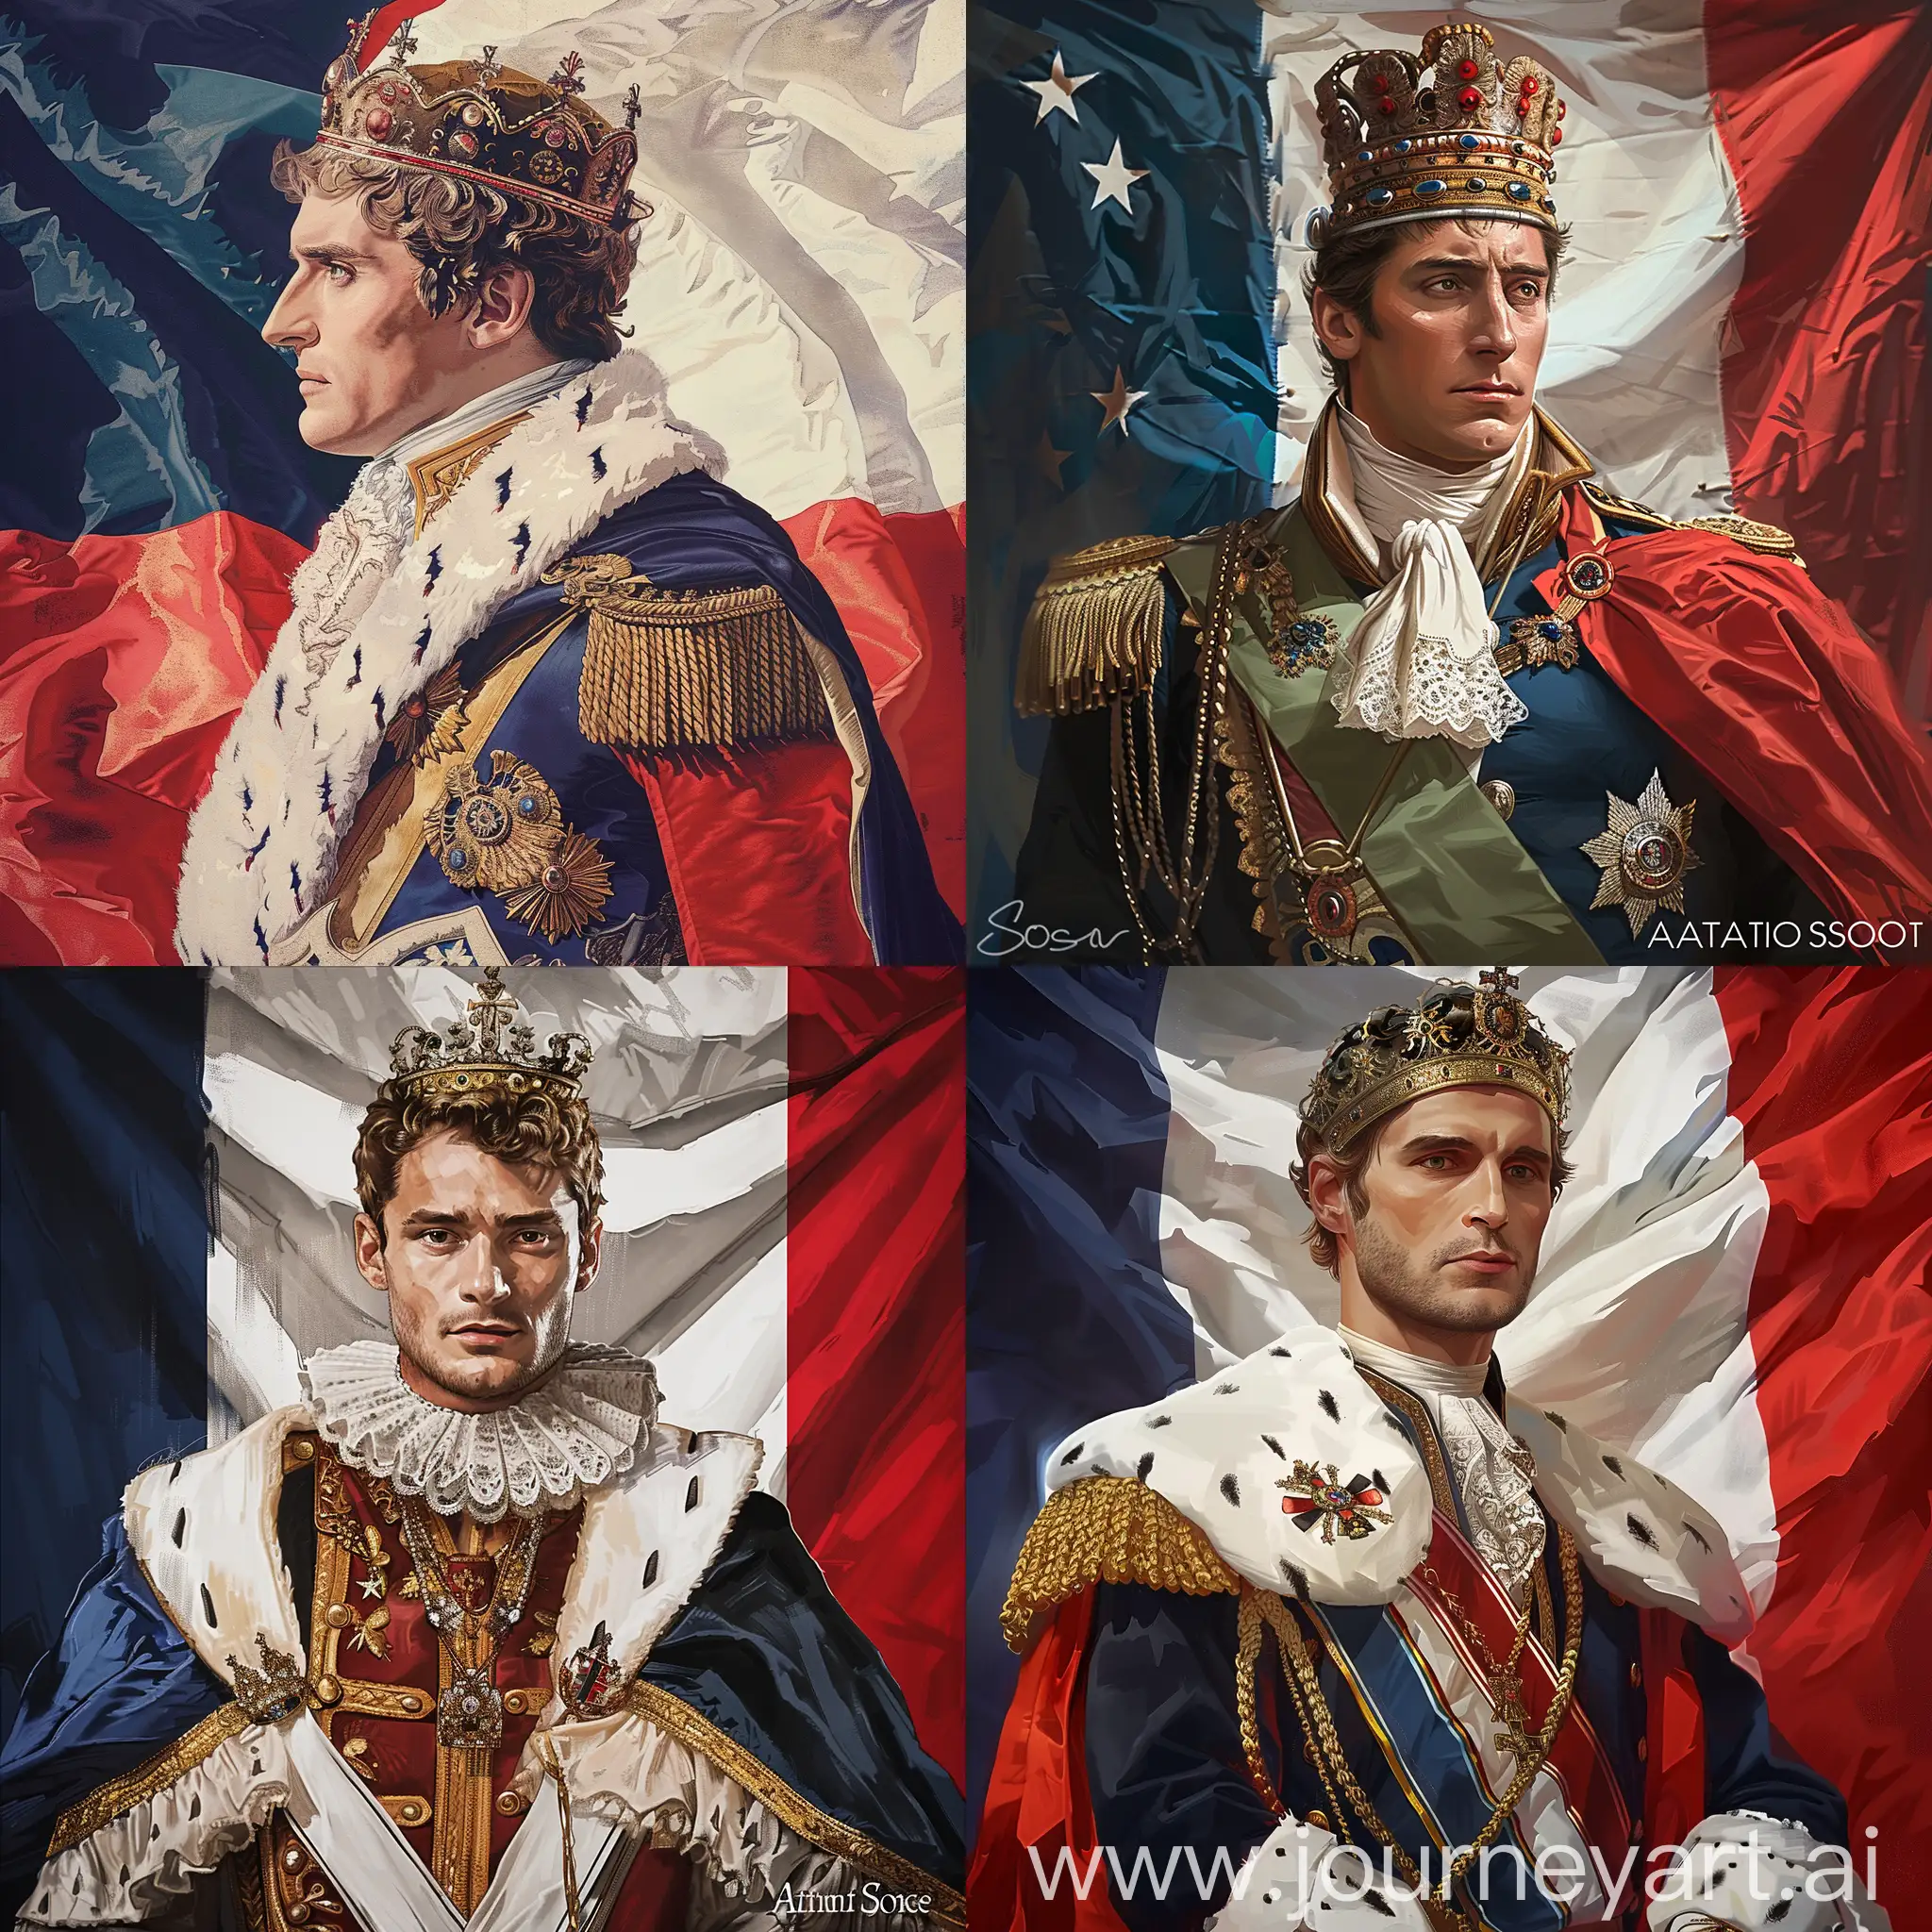 Historical-Illustration-Napoleon-Bonaparte-in-Royal-Attire-with-France-Flag-Background